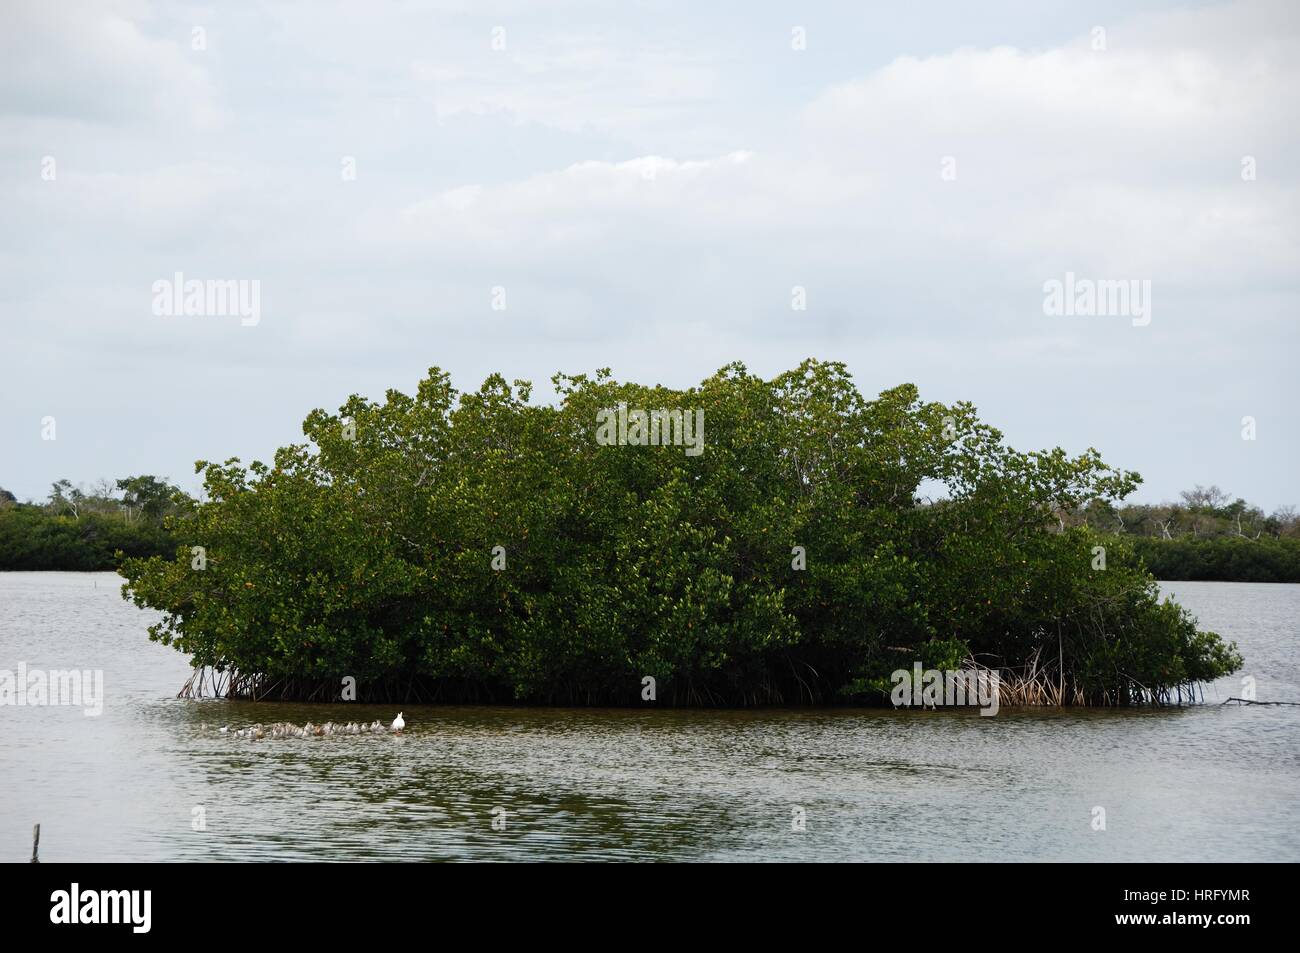 Ding Darling park on Sanibel Island in Florida Stock Photo